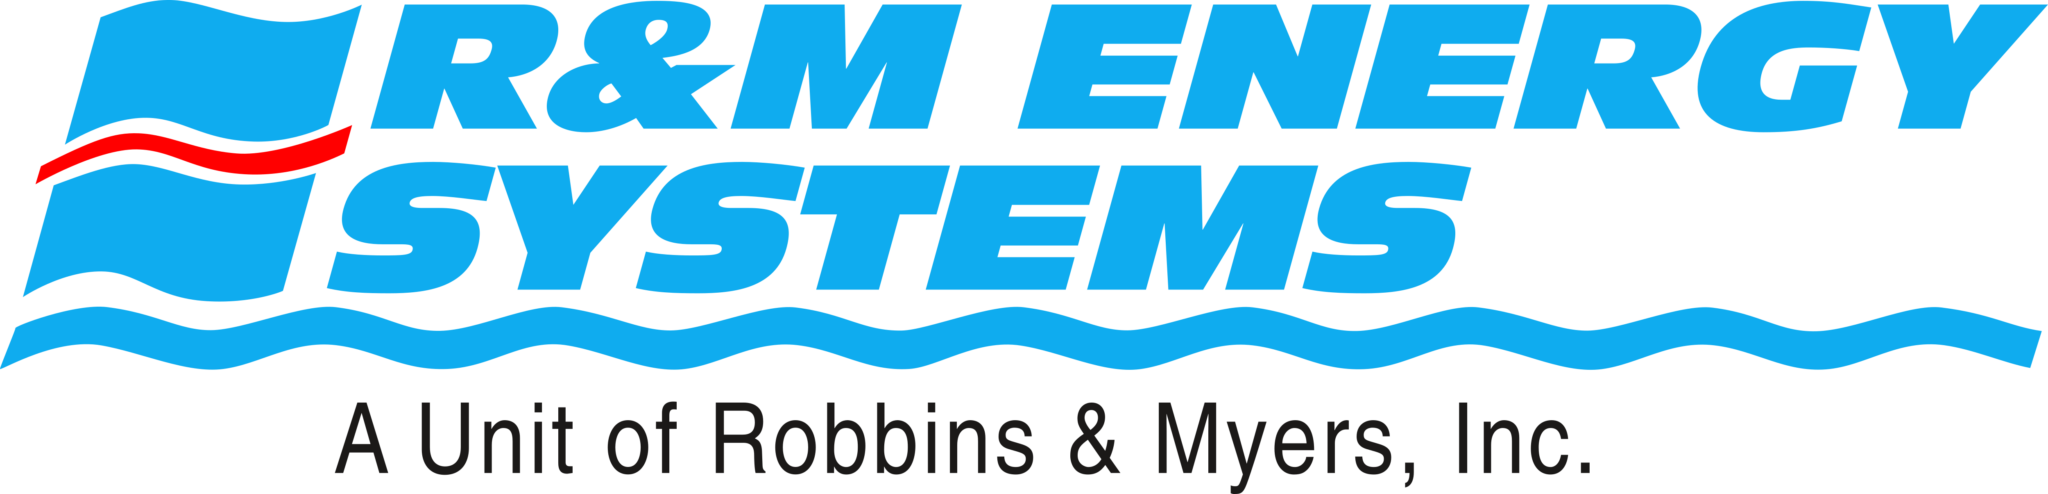 Energy units. M Энергетик лого. Energy System logo. Энерджи лого бытовая техника. Норд Энерджи Системс Князева.